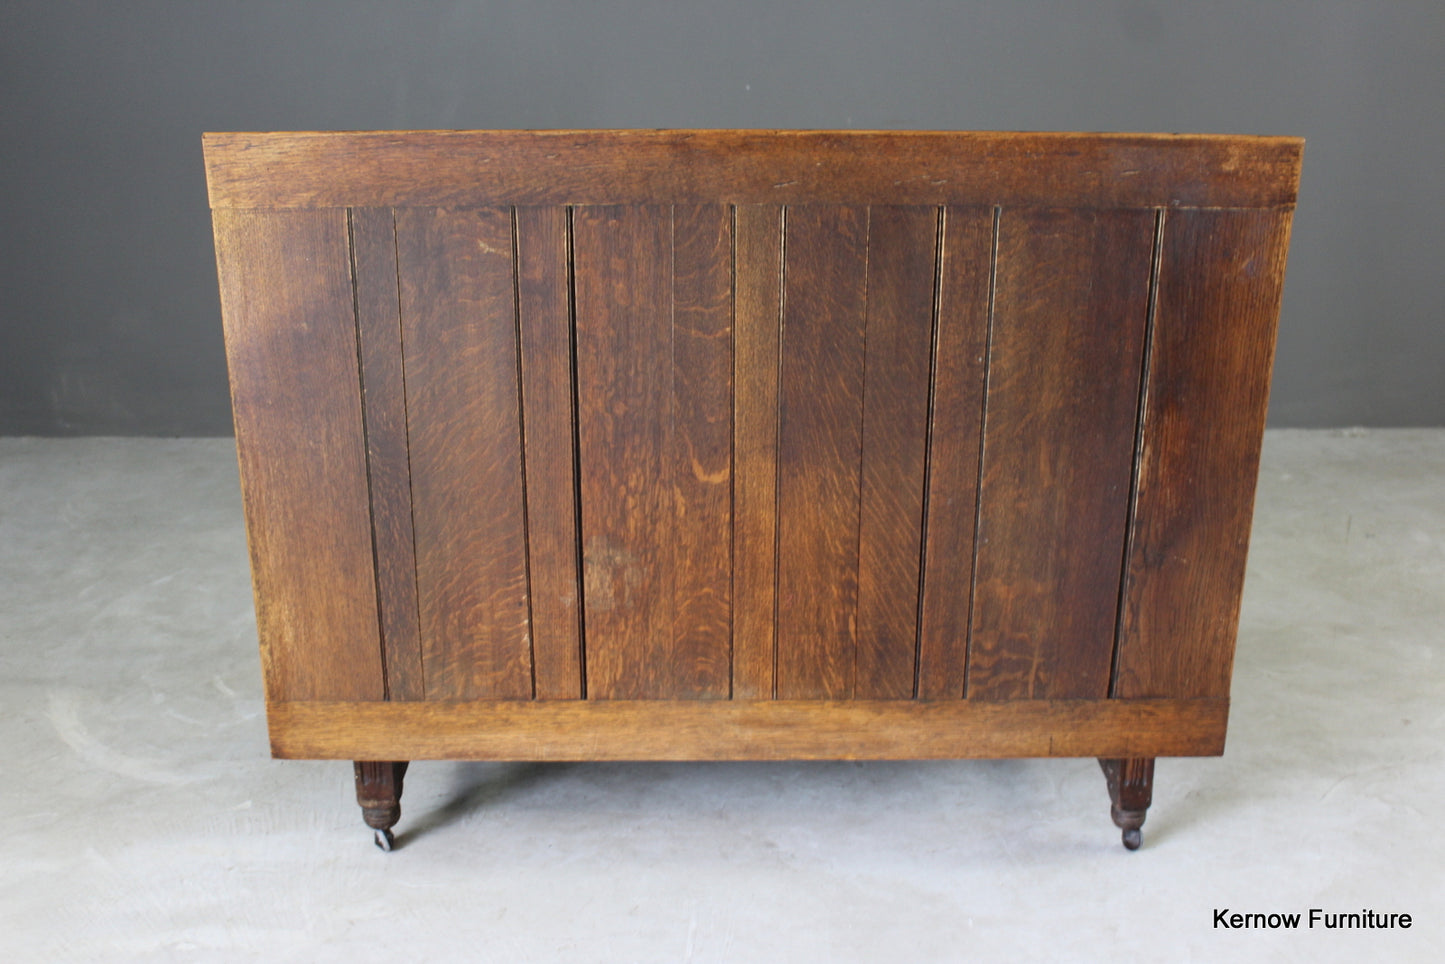 1930s Upholstered Oak Monks Bench - Kernow Furniture